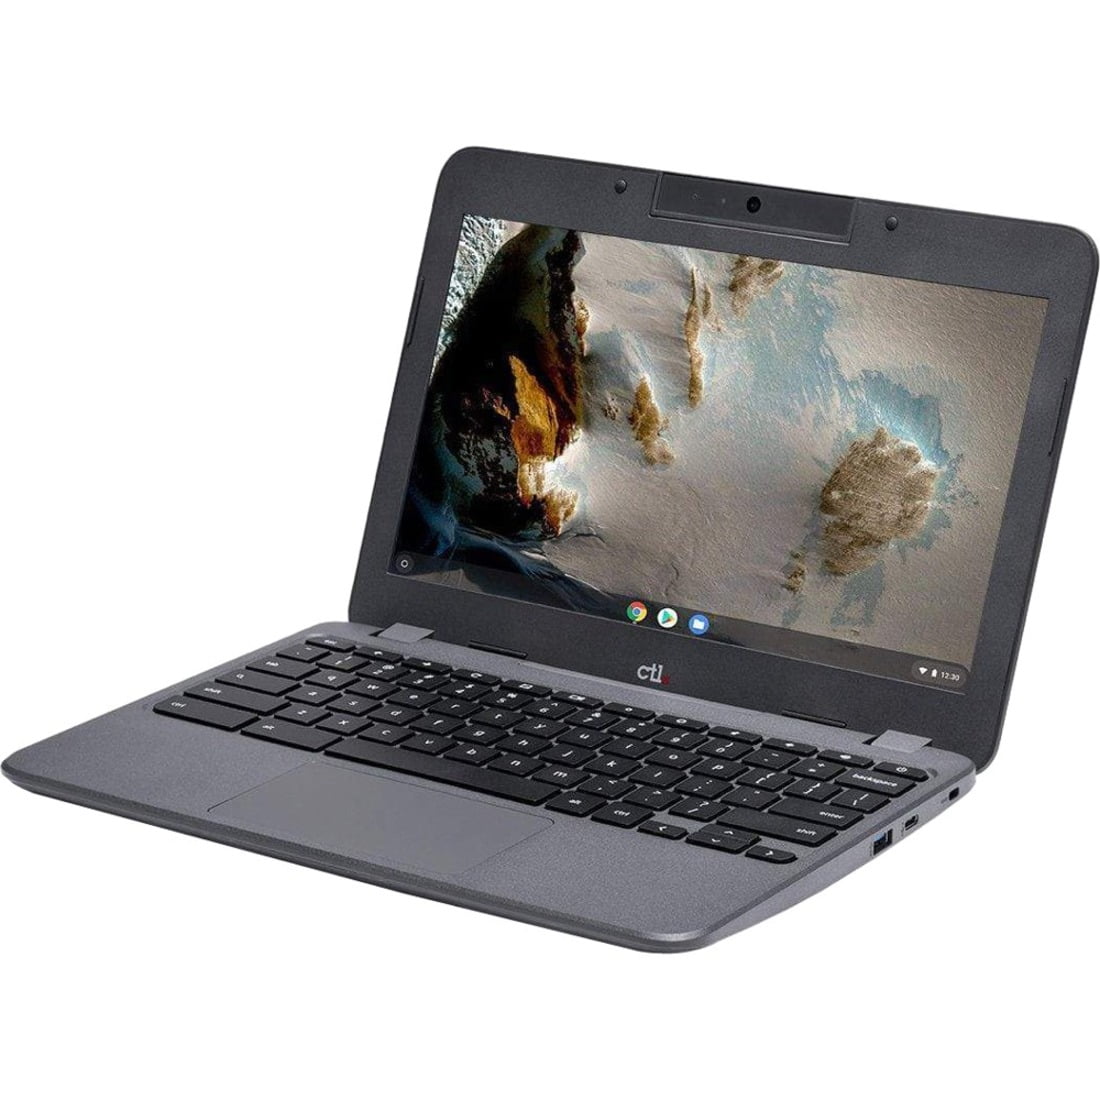 AVITA Clarus 14” Laptop, Windows 10, Intel Core i5 Processor, 8GB 